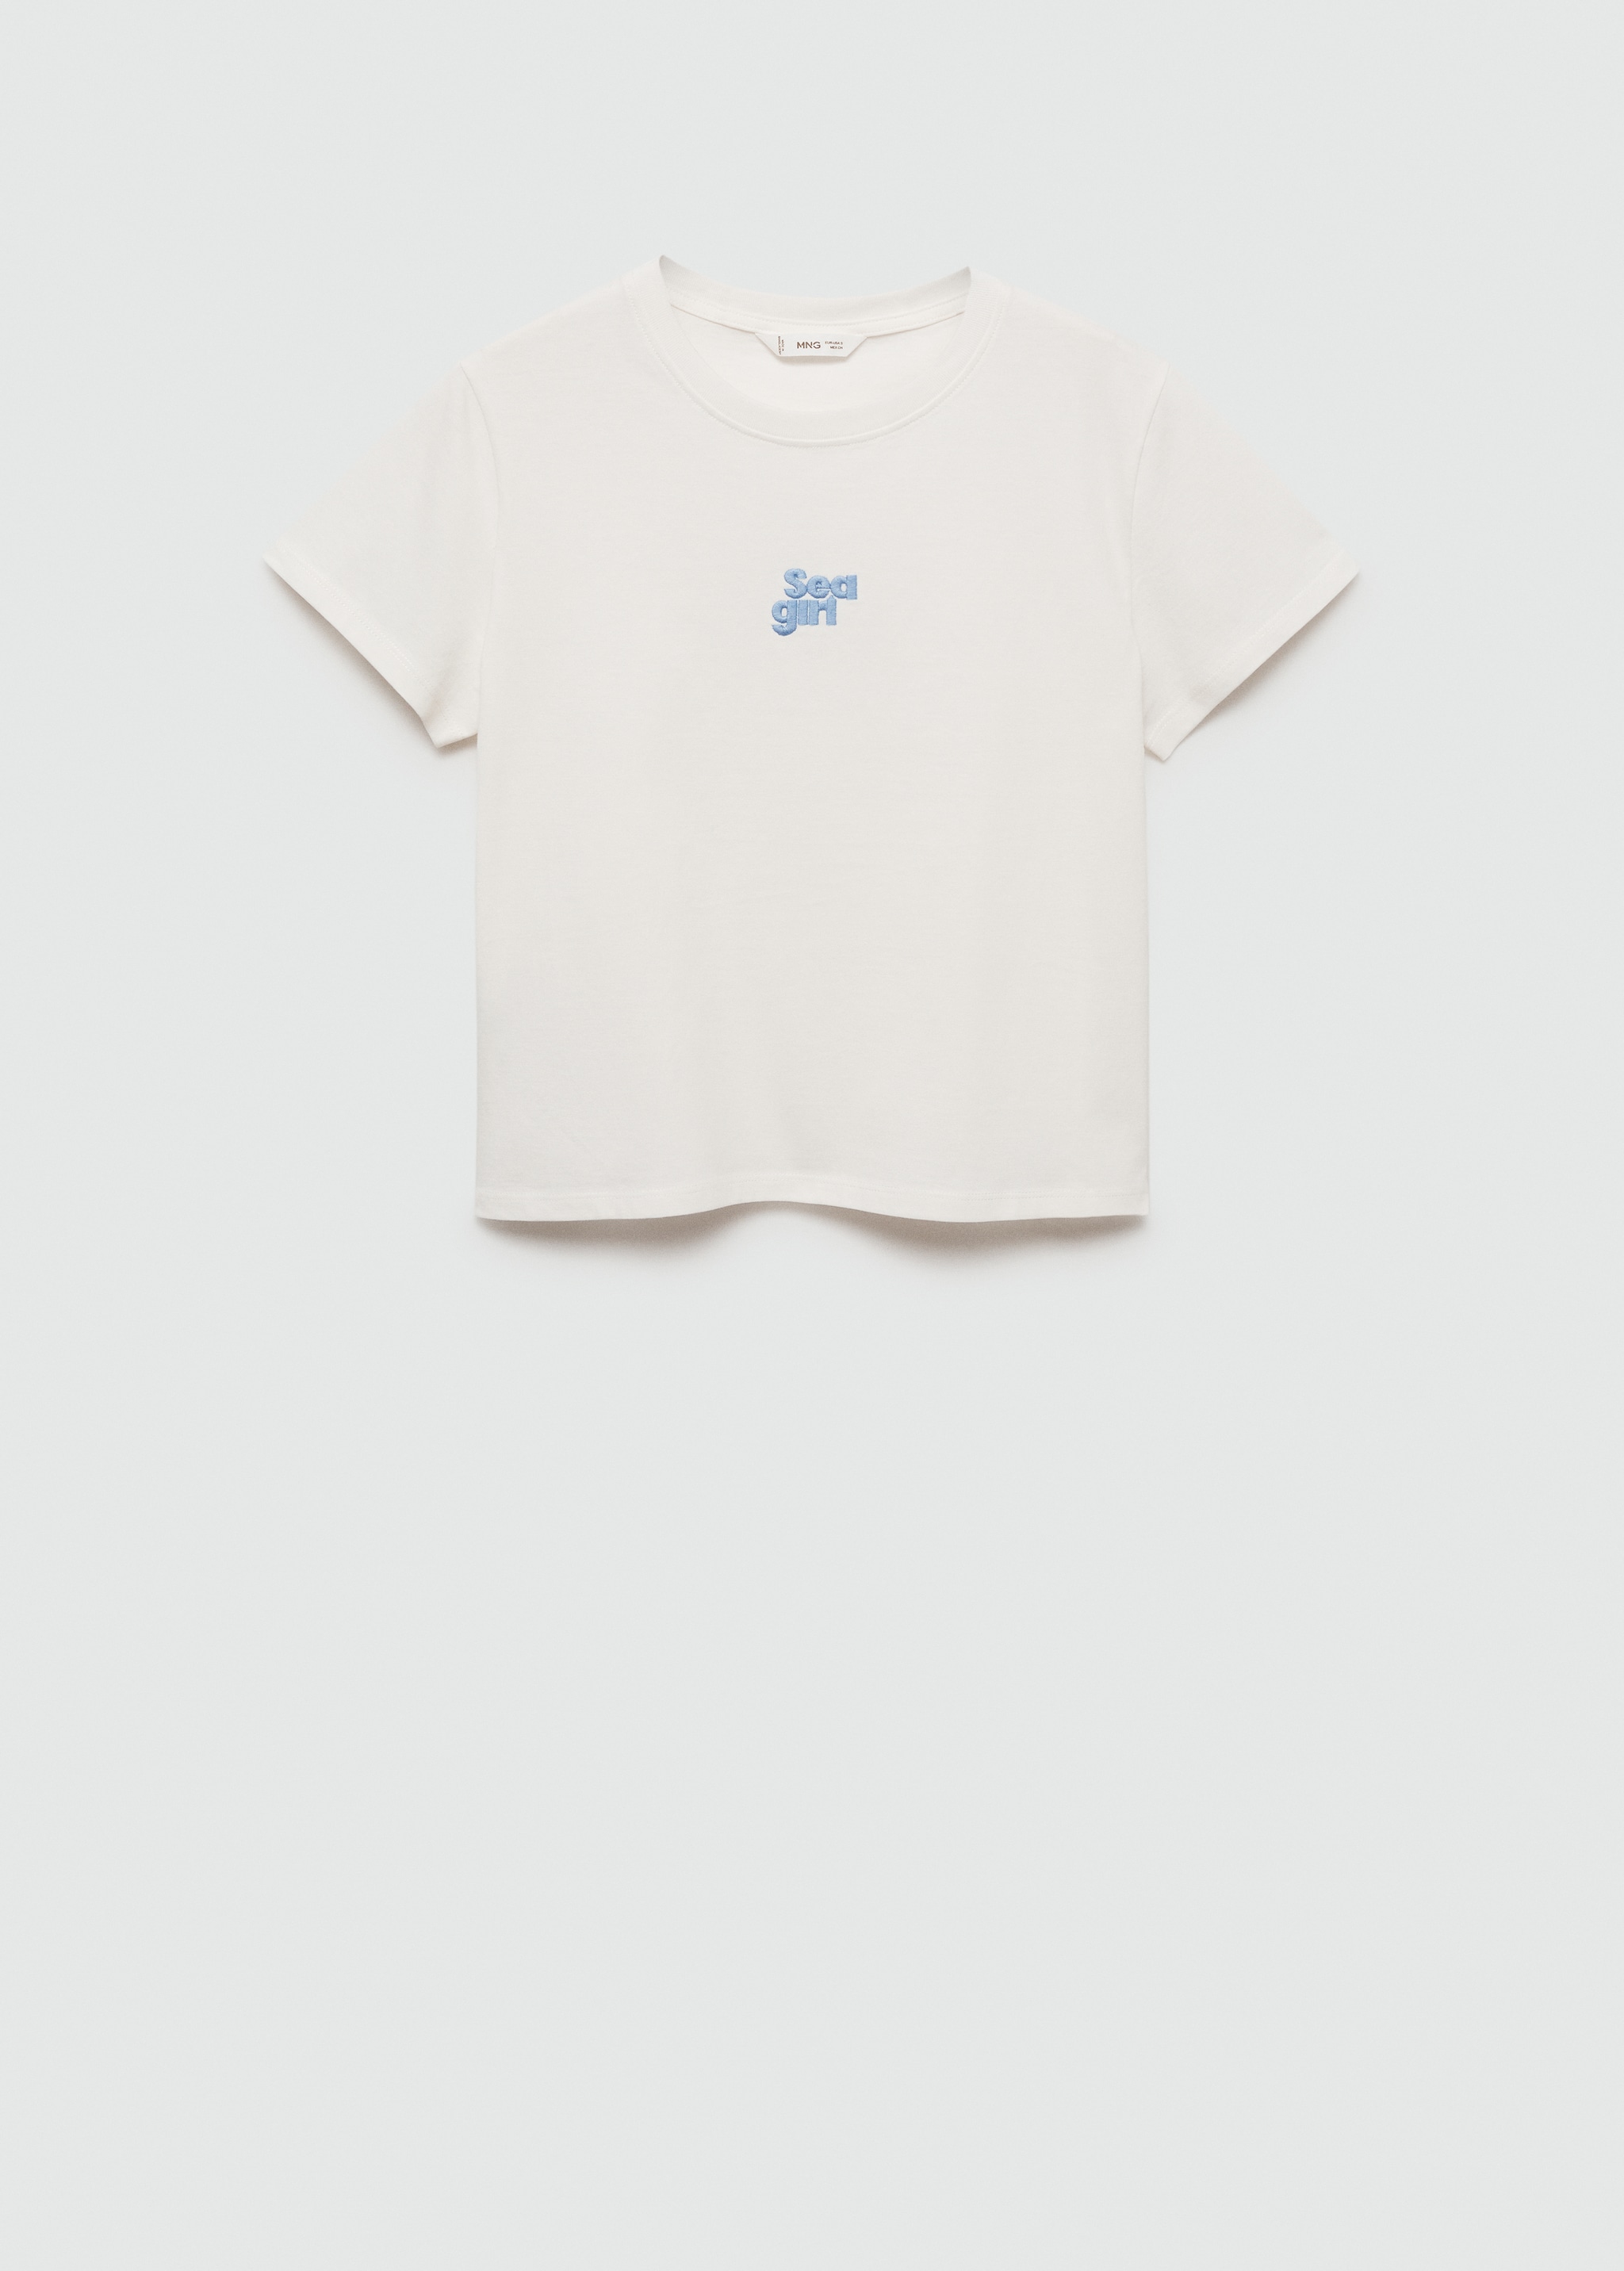 T-shirt sea - Изделие без модели